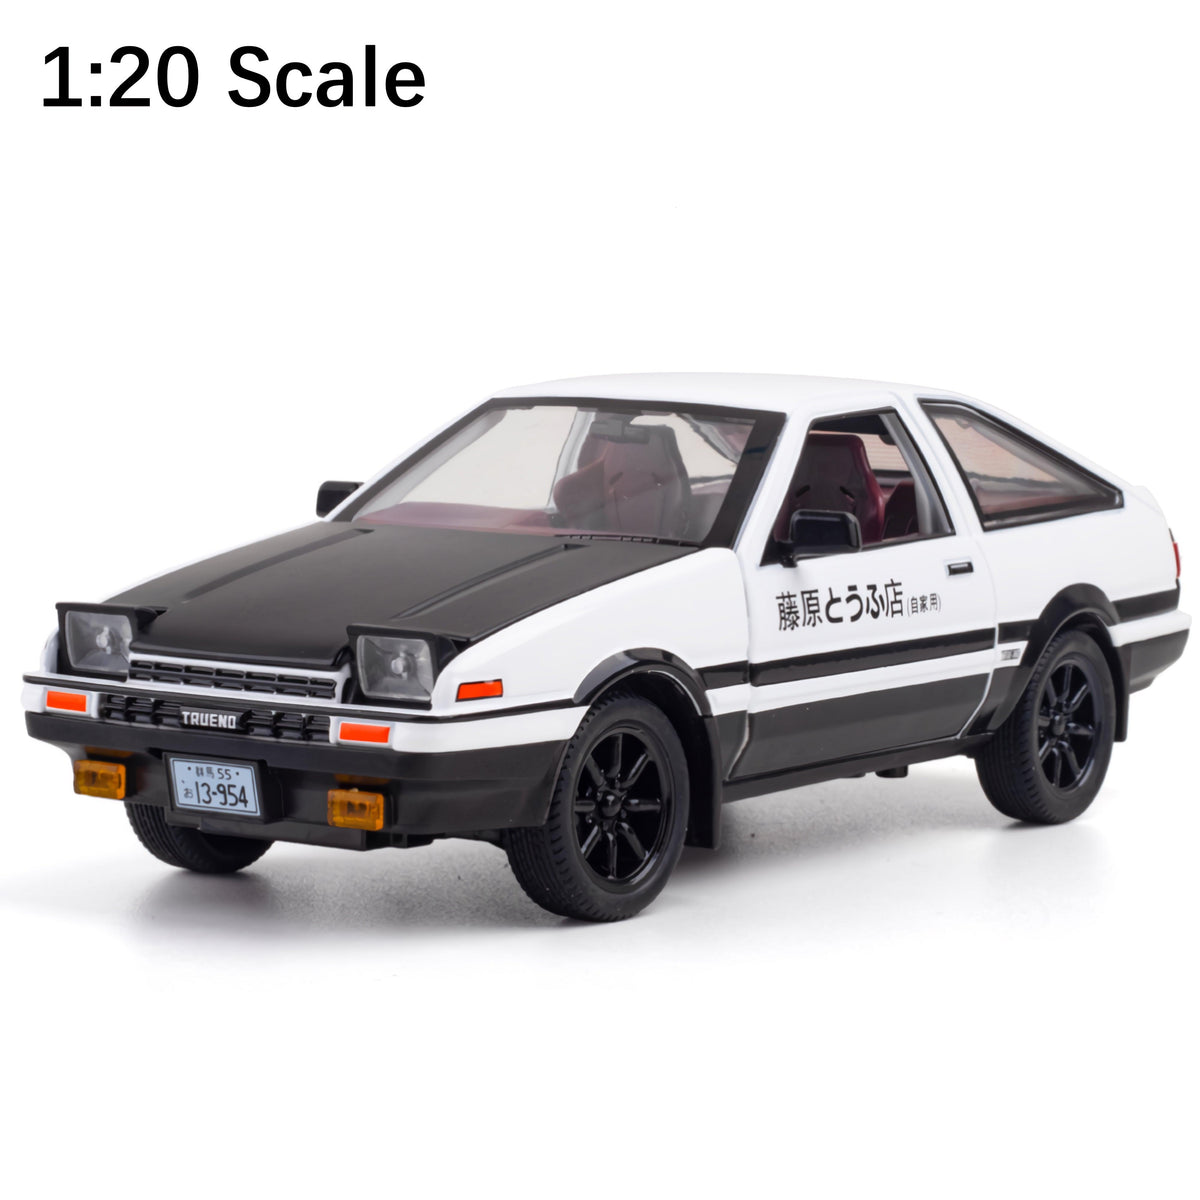 1:28/1:20 Scale AE86 Alloy Die-Cast Model Car - PANSEKtoy